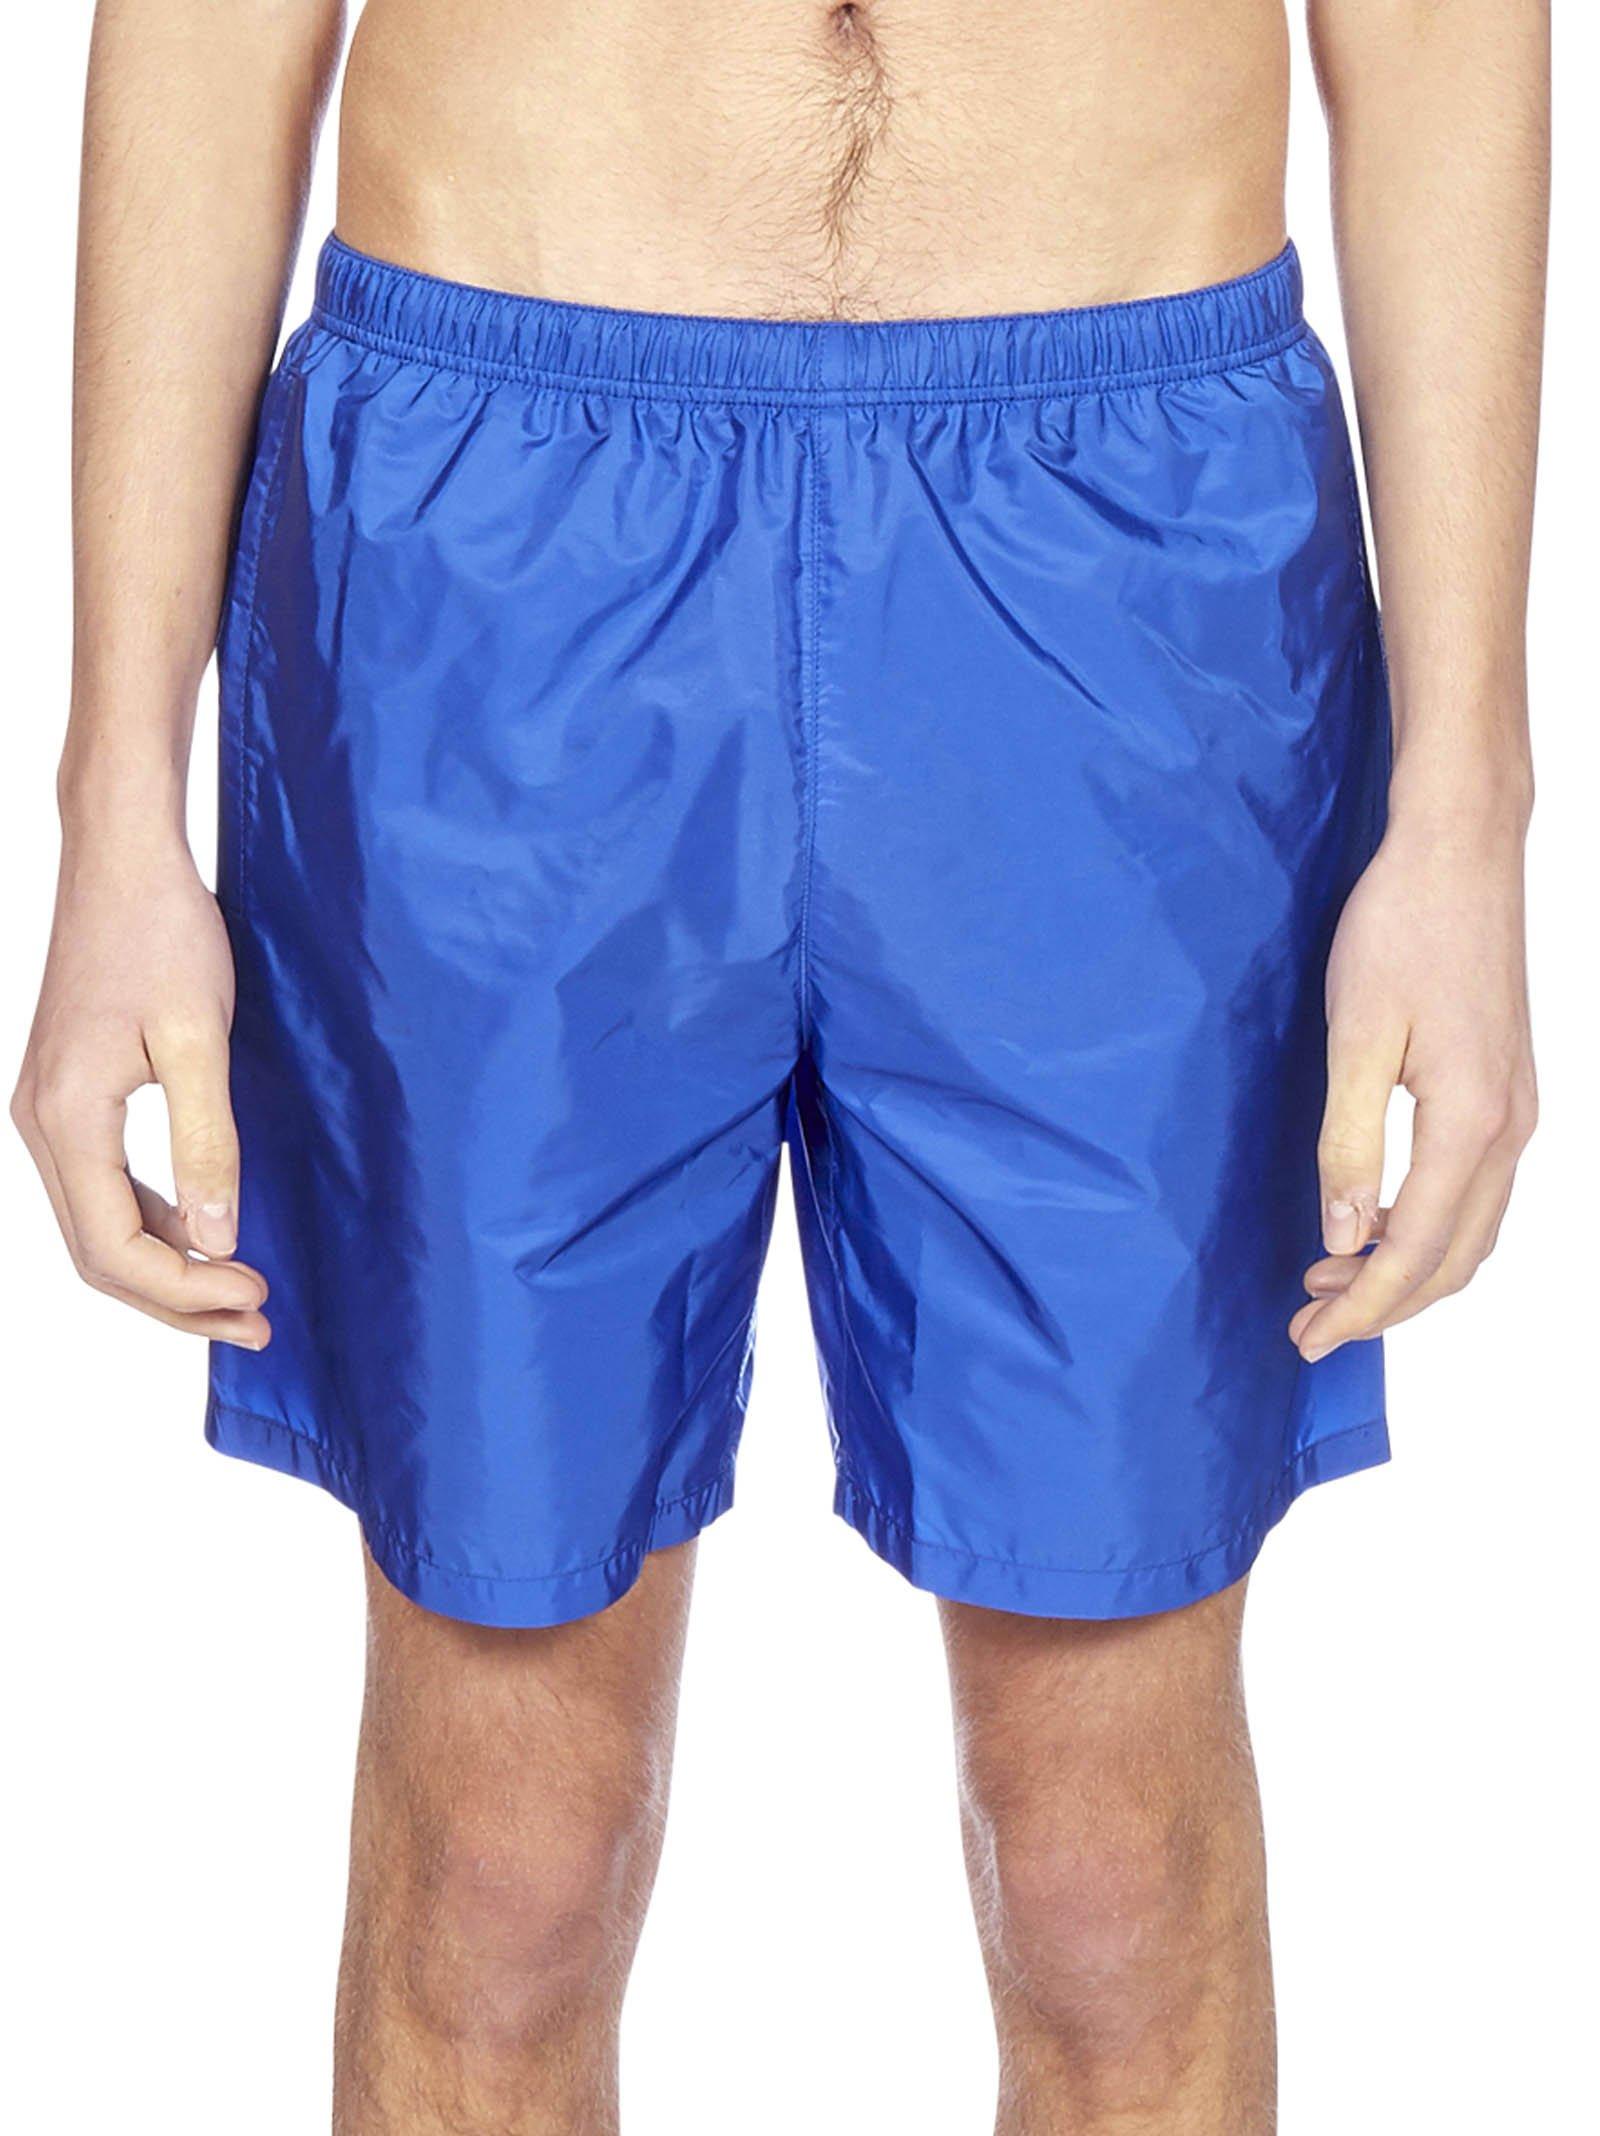 Prada Synthetic Elastic Waist Swim Shorts in Blue for Men - Lyst